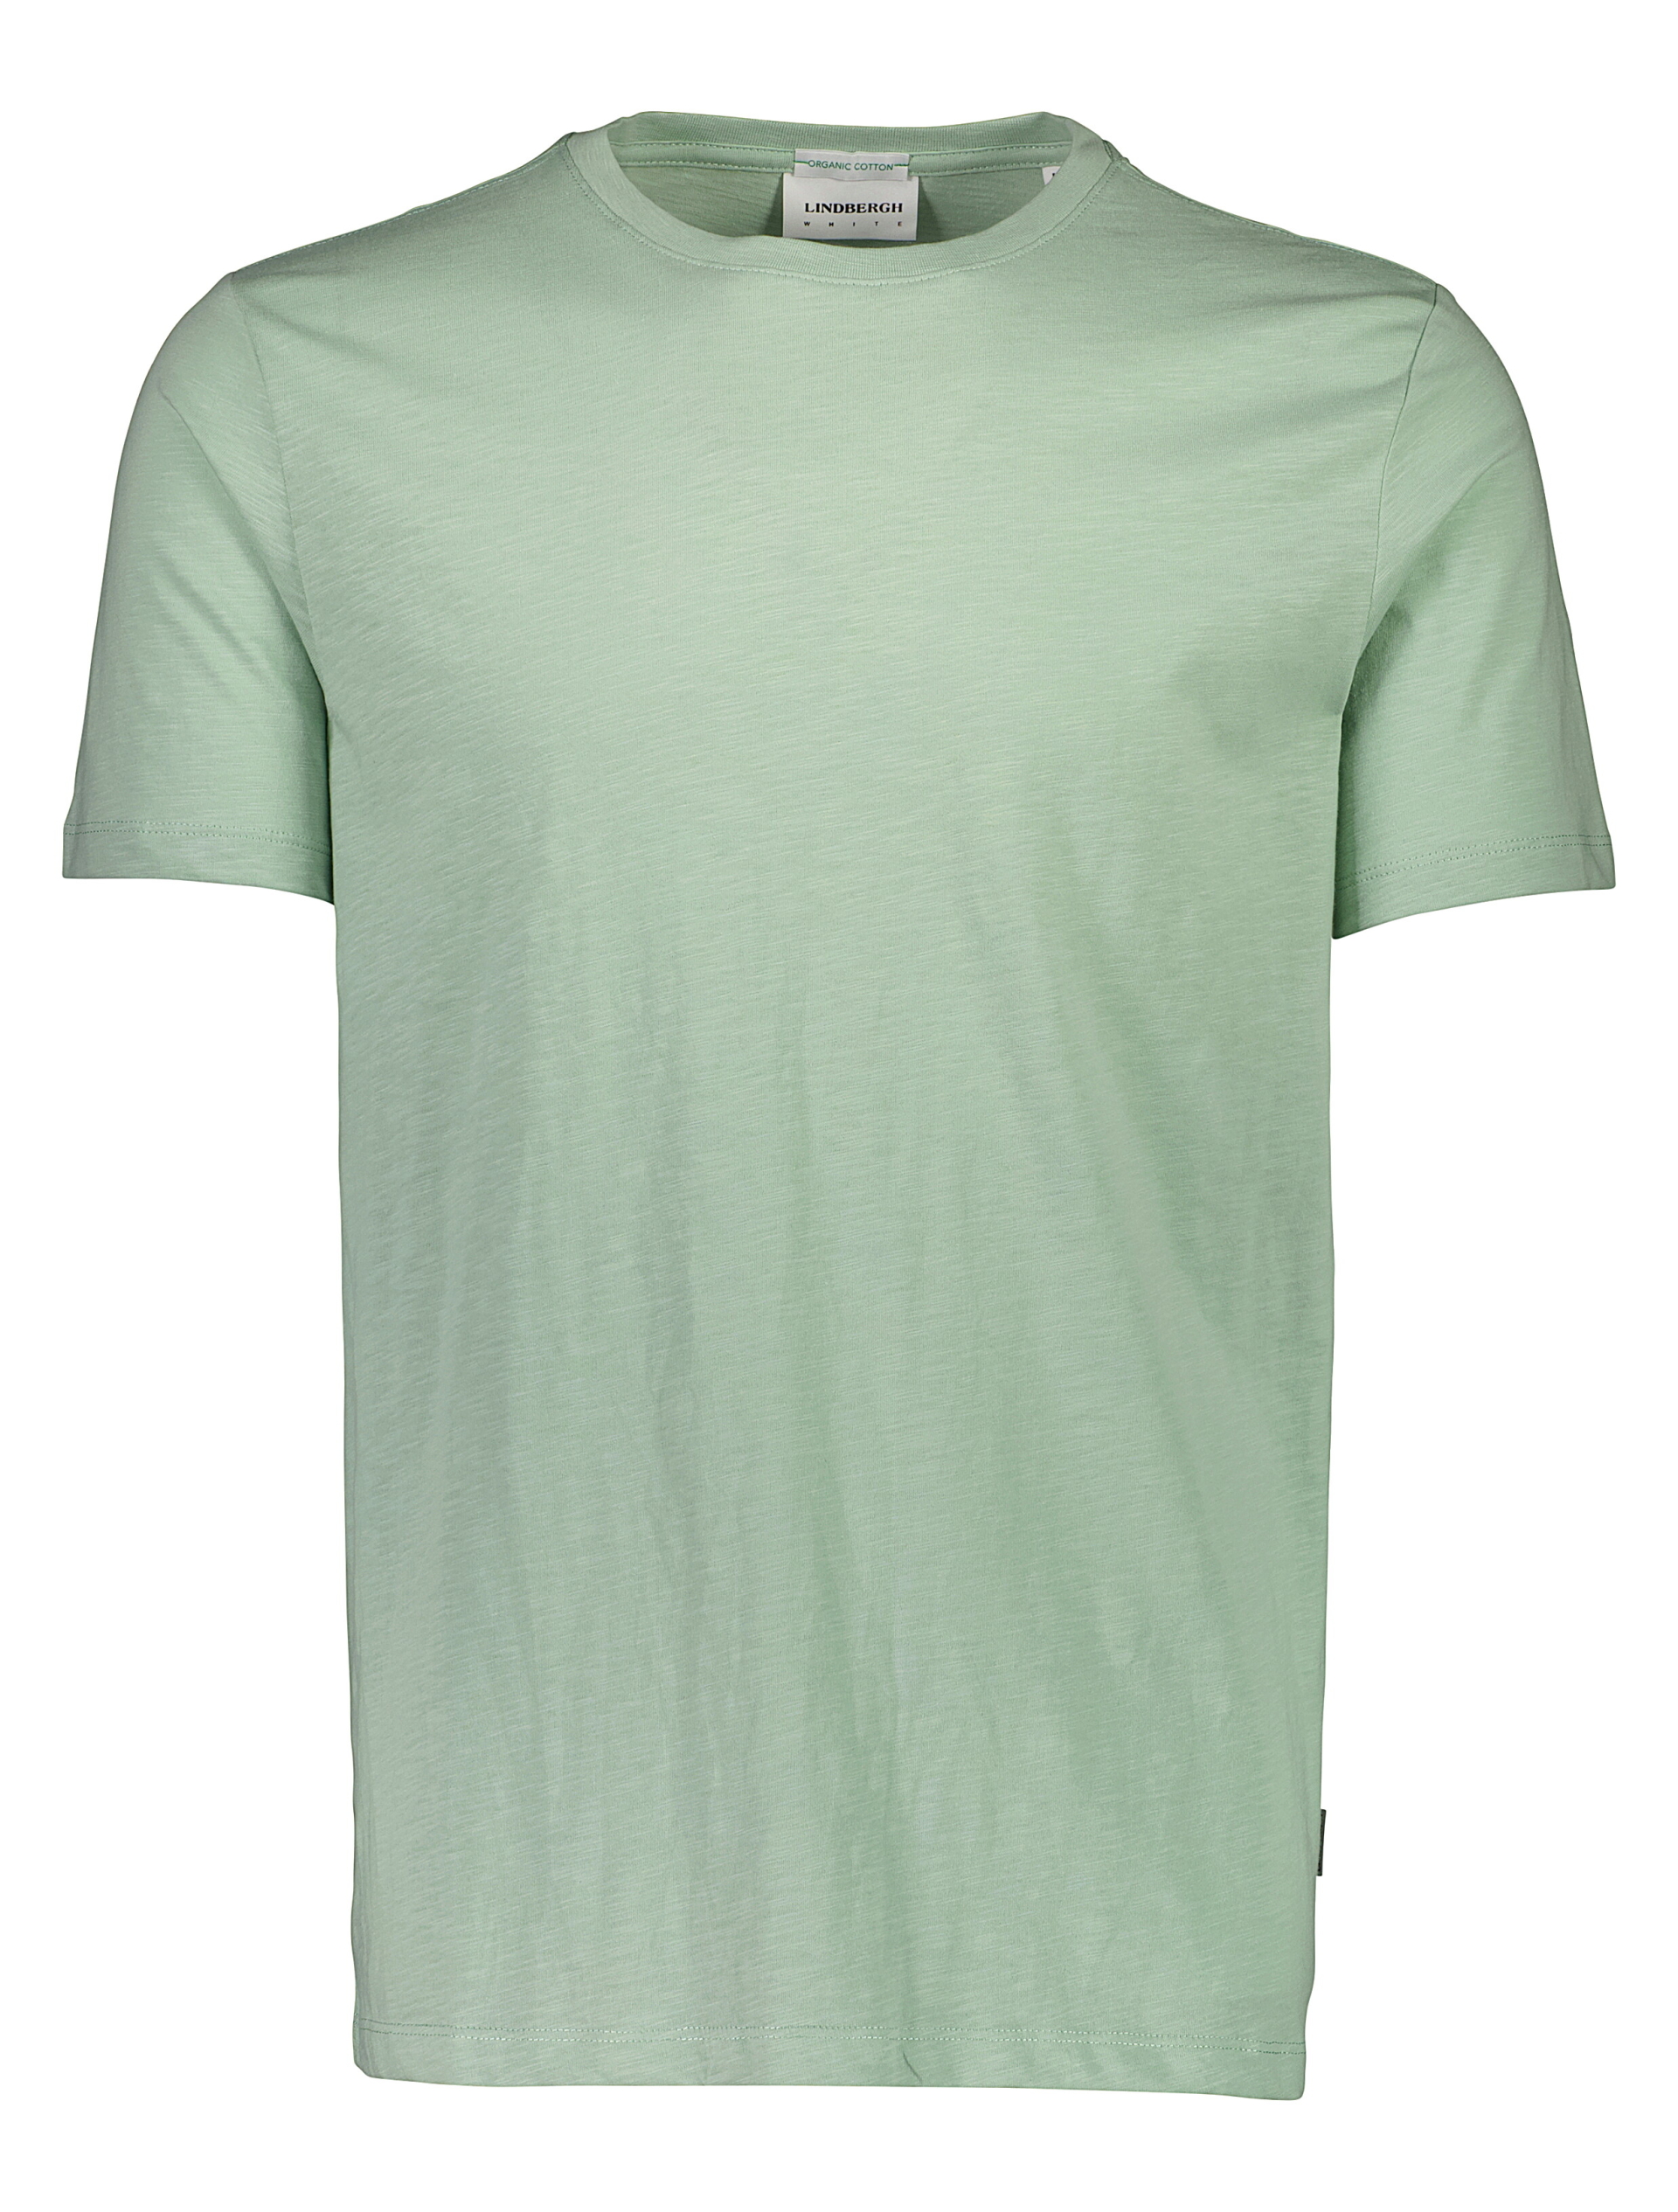 Lindbergh T-shirt grøn / dusty mint